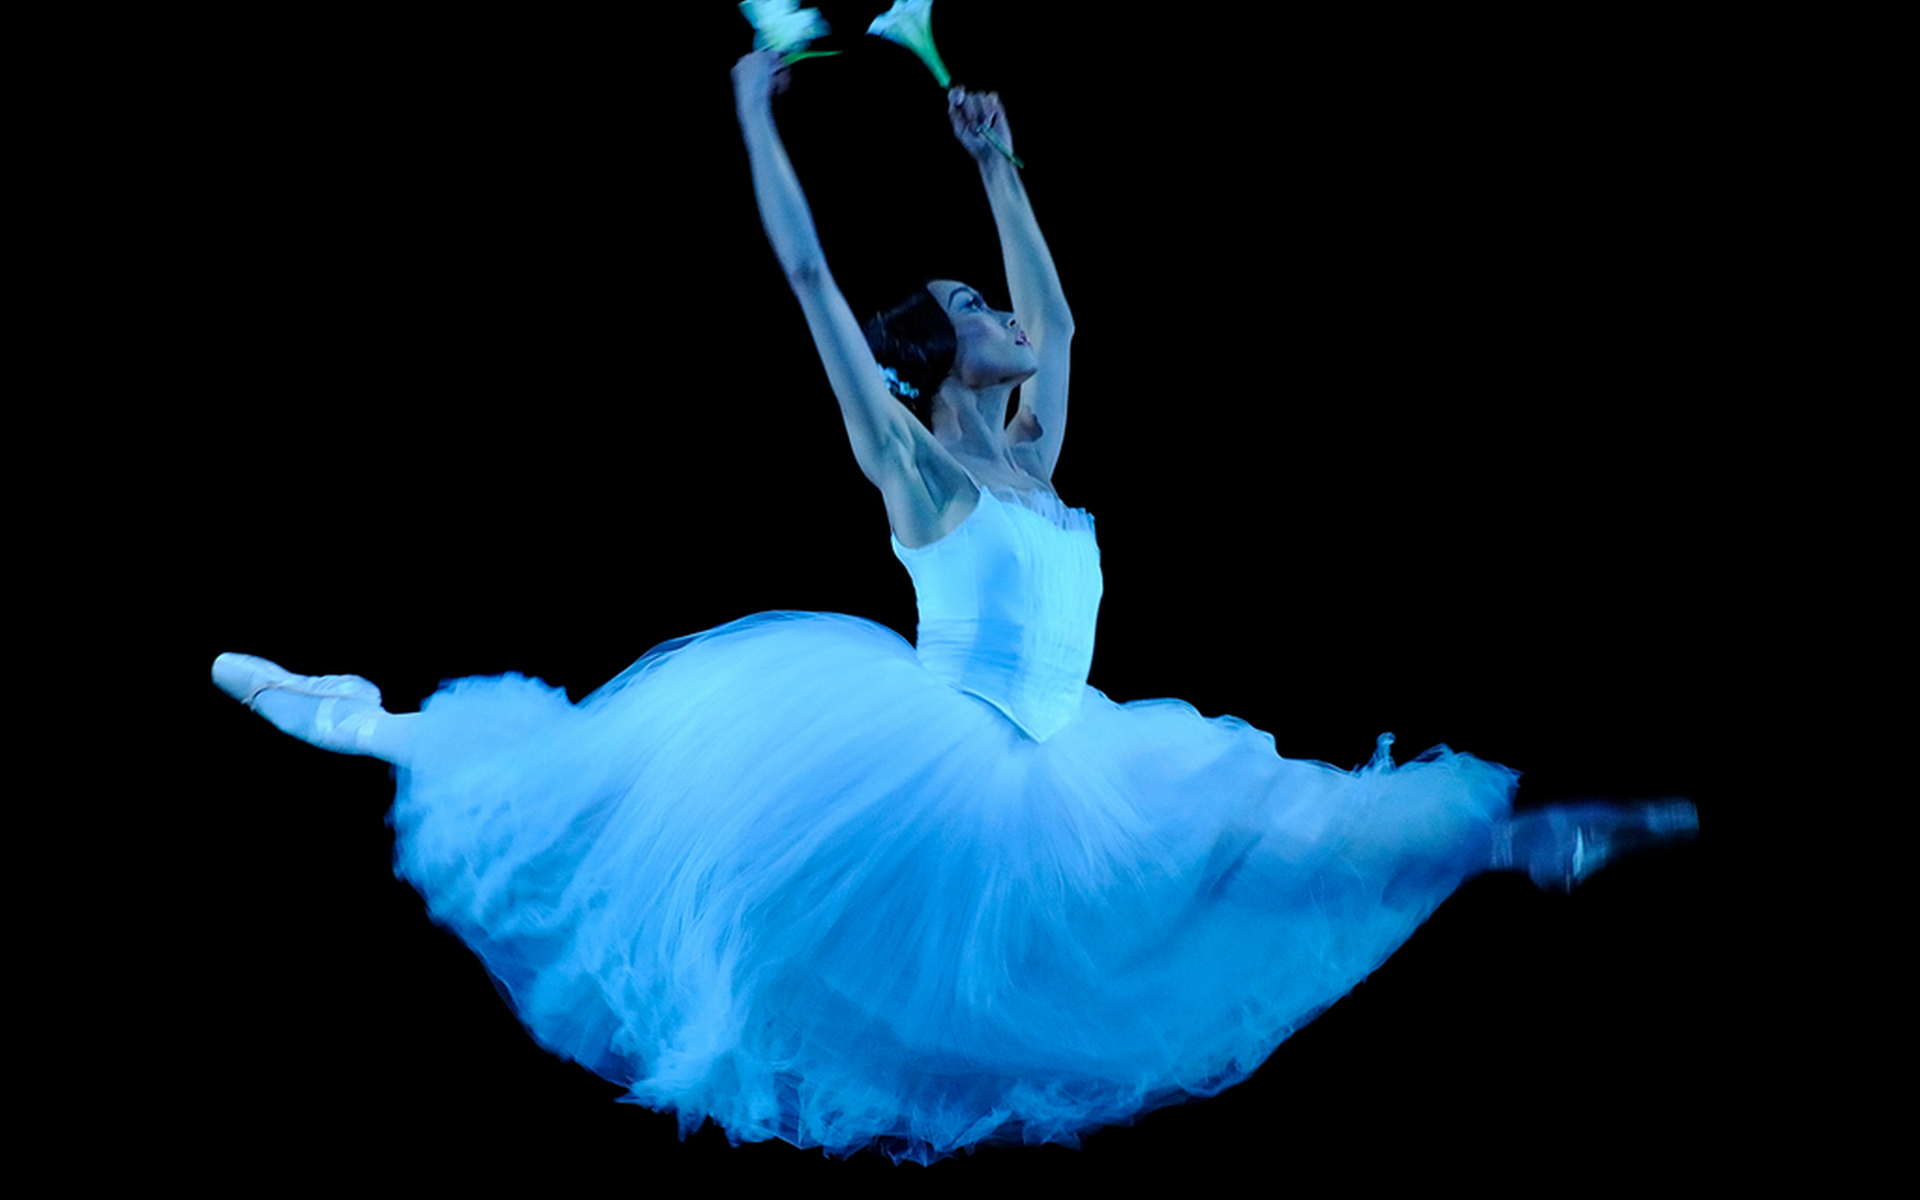 Women Ballet HD Wallpaper | Background Image